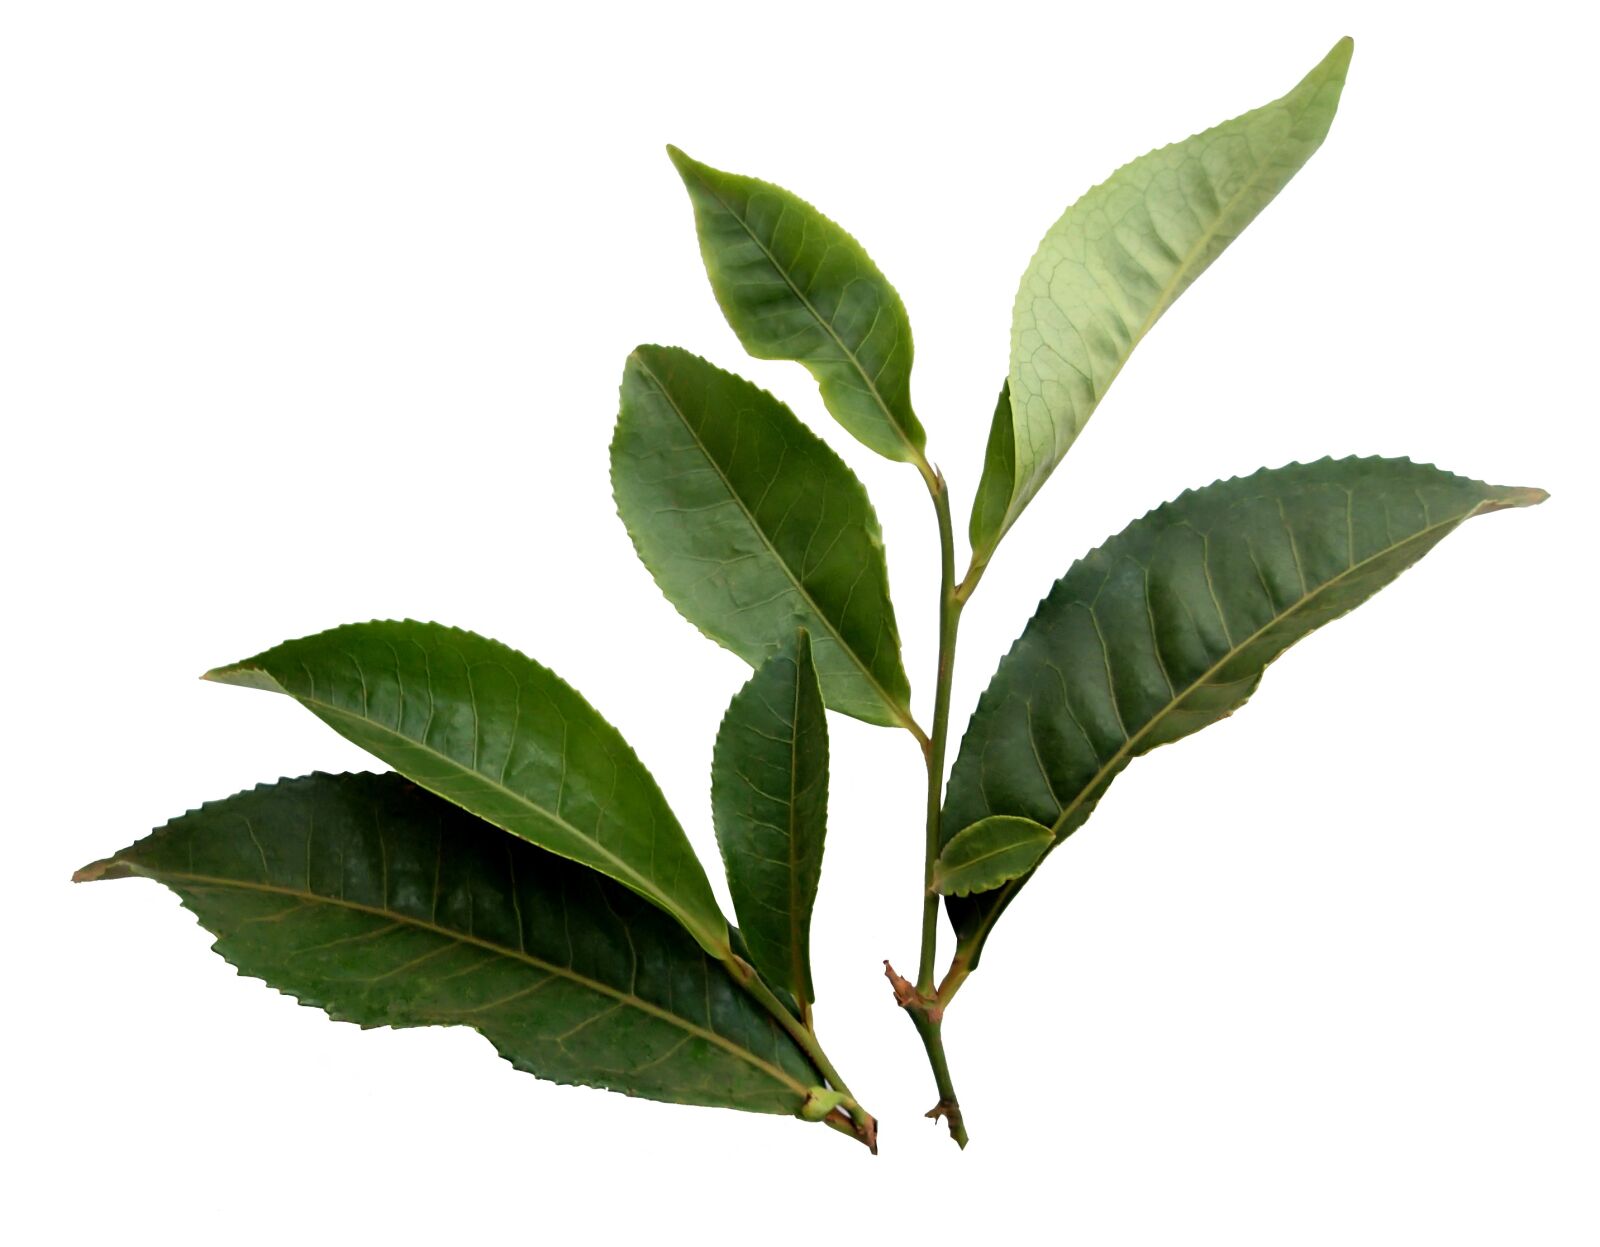 Olympus TG-1 sample photo. Tea, leaf, plant photography